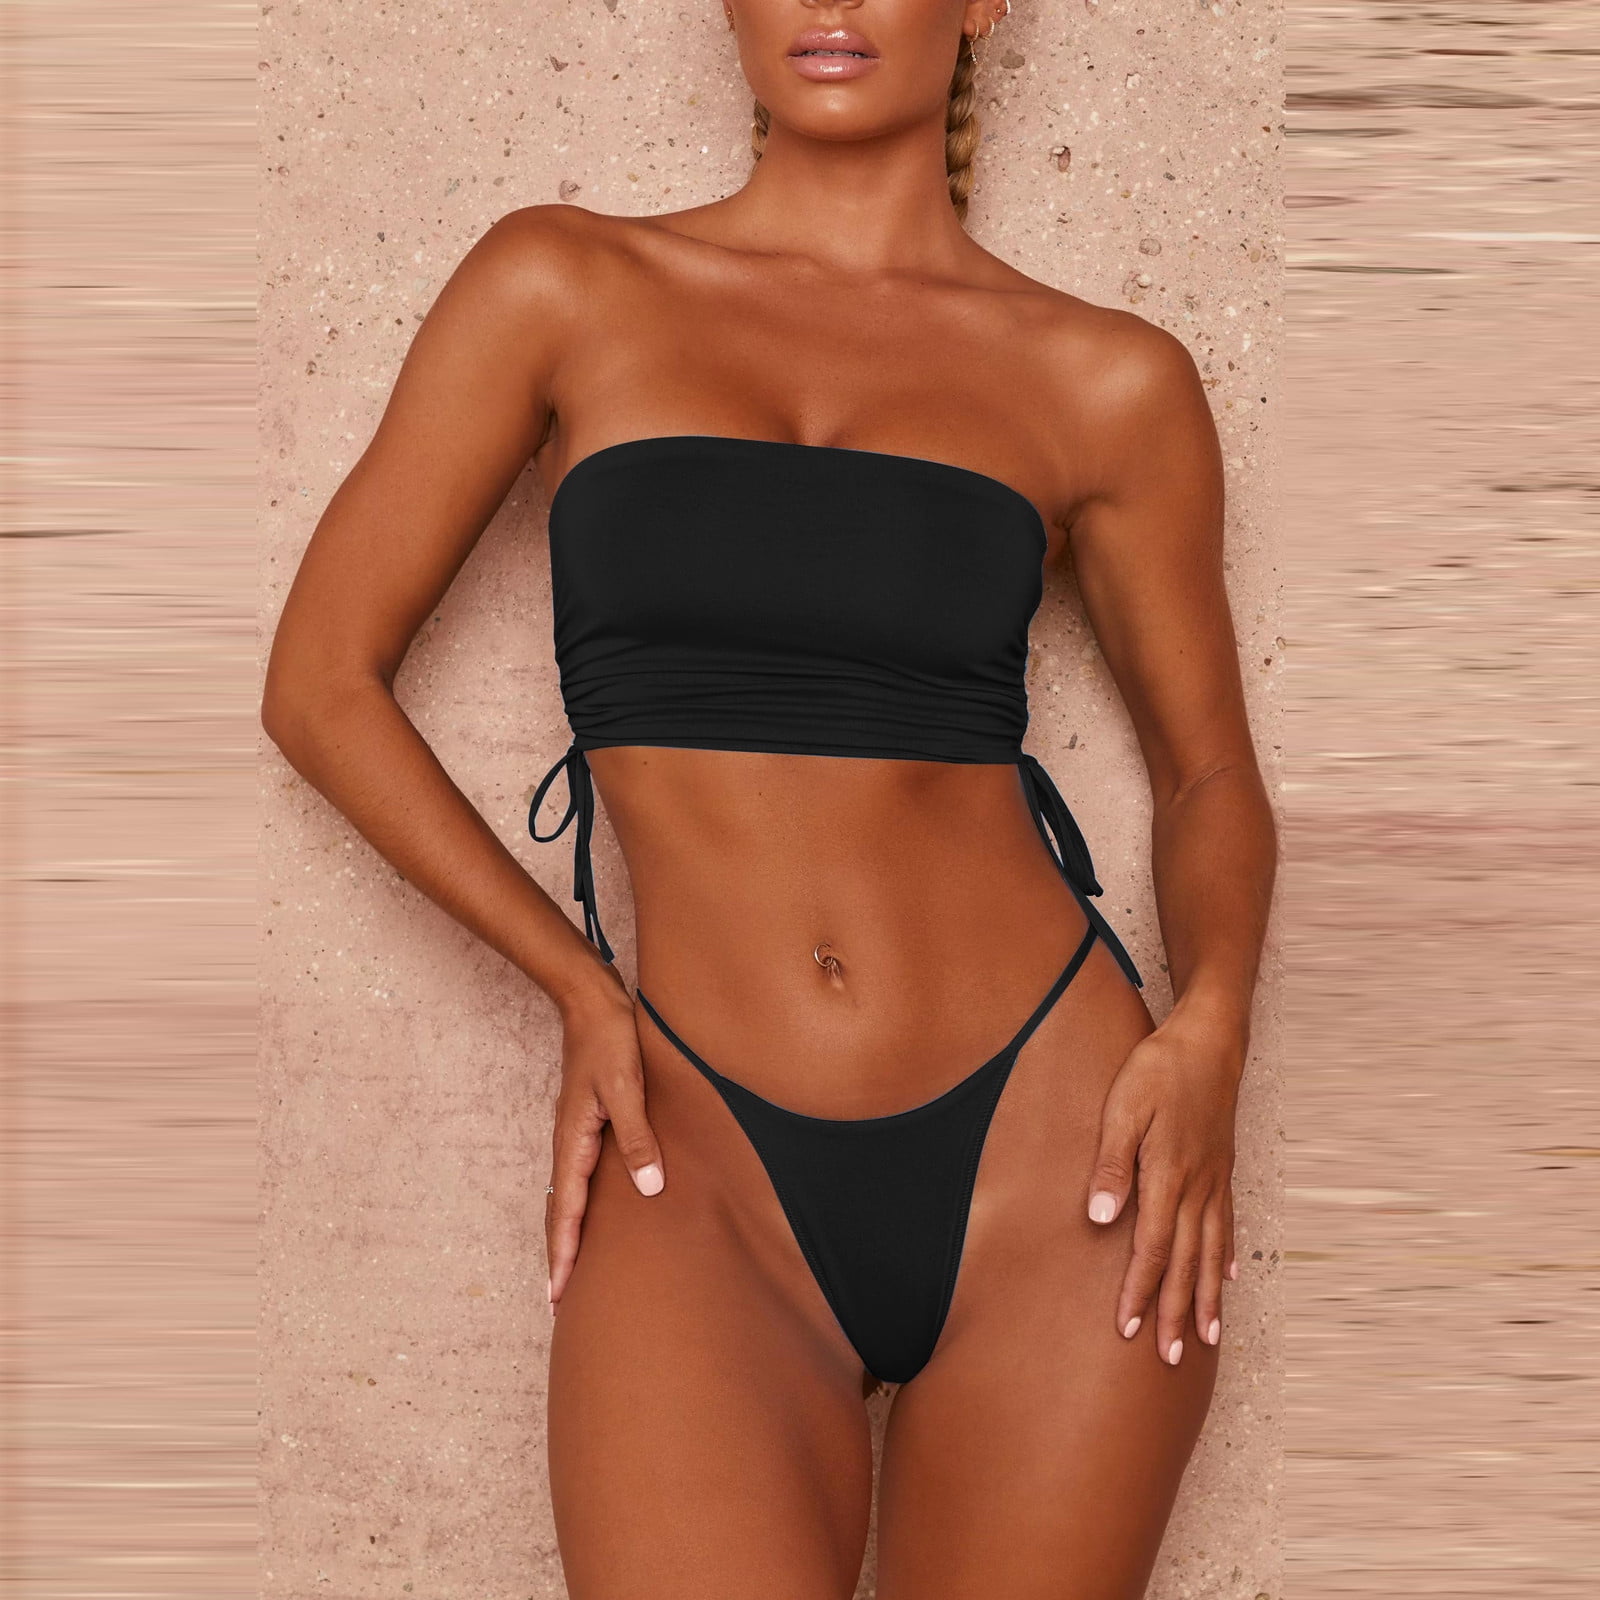 Meitianfacai Two Piece Tankini Swimsuit for Women Plus Size High Waisted Tummy Control Boyshort Beachwear Bathing Suits 